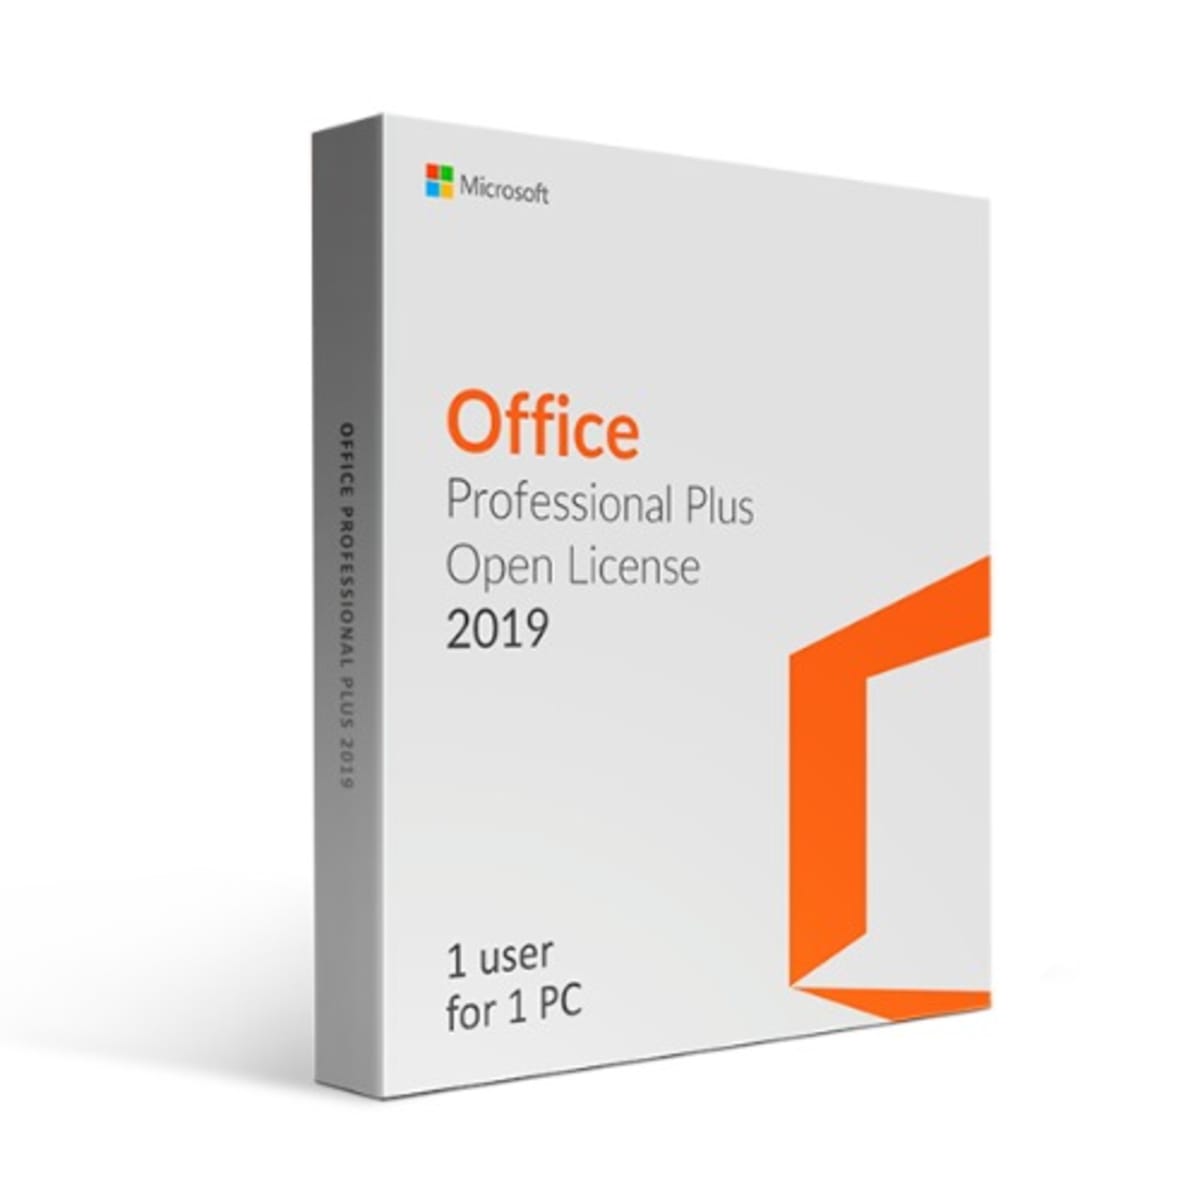 Microsoft Office Professional Plus 2019 (1 PC) - Buy Product Key